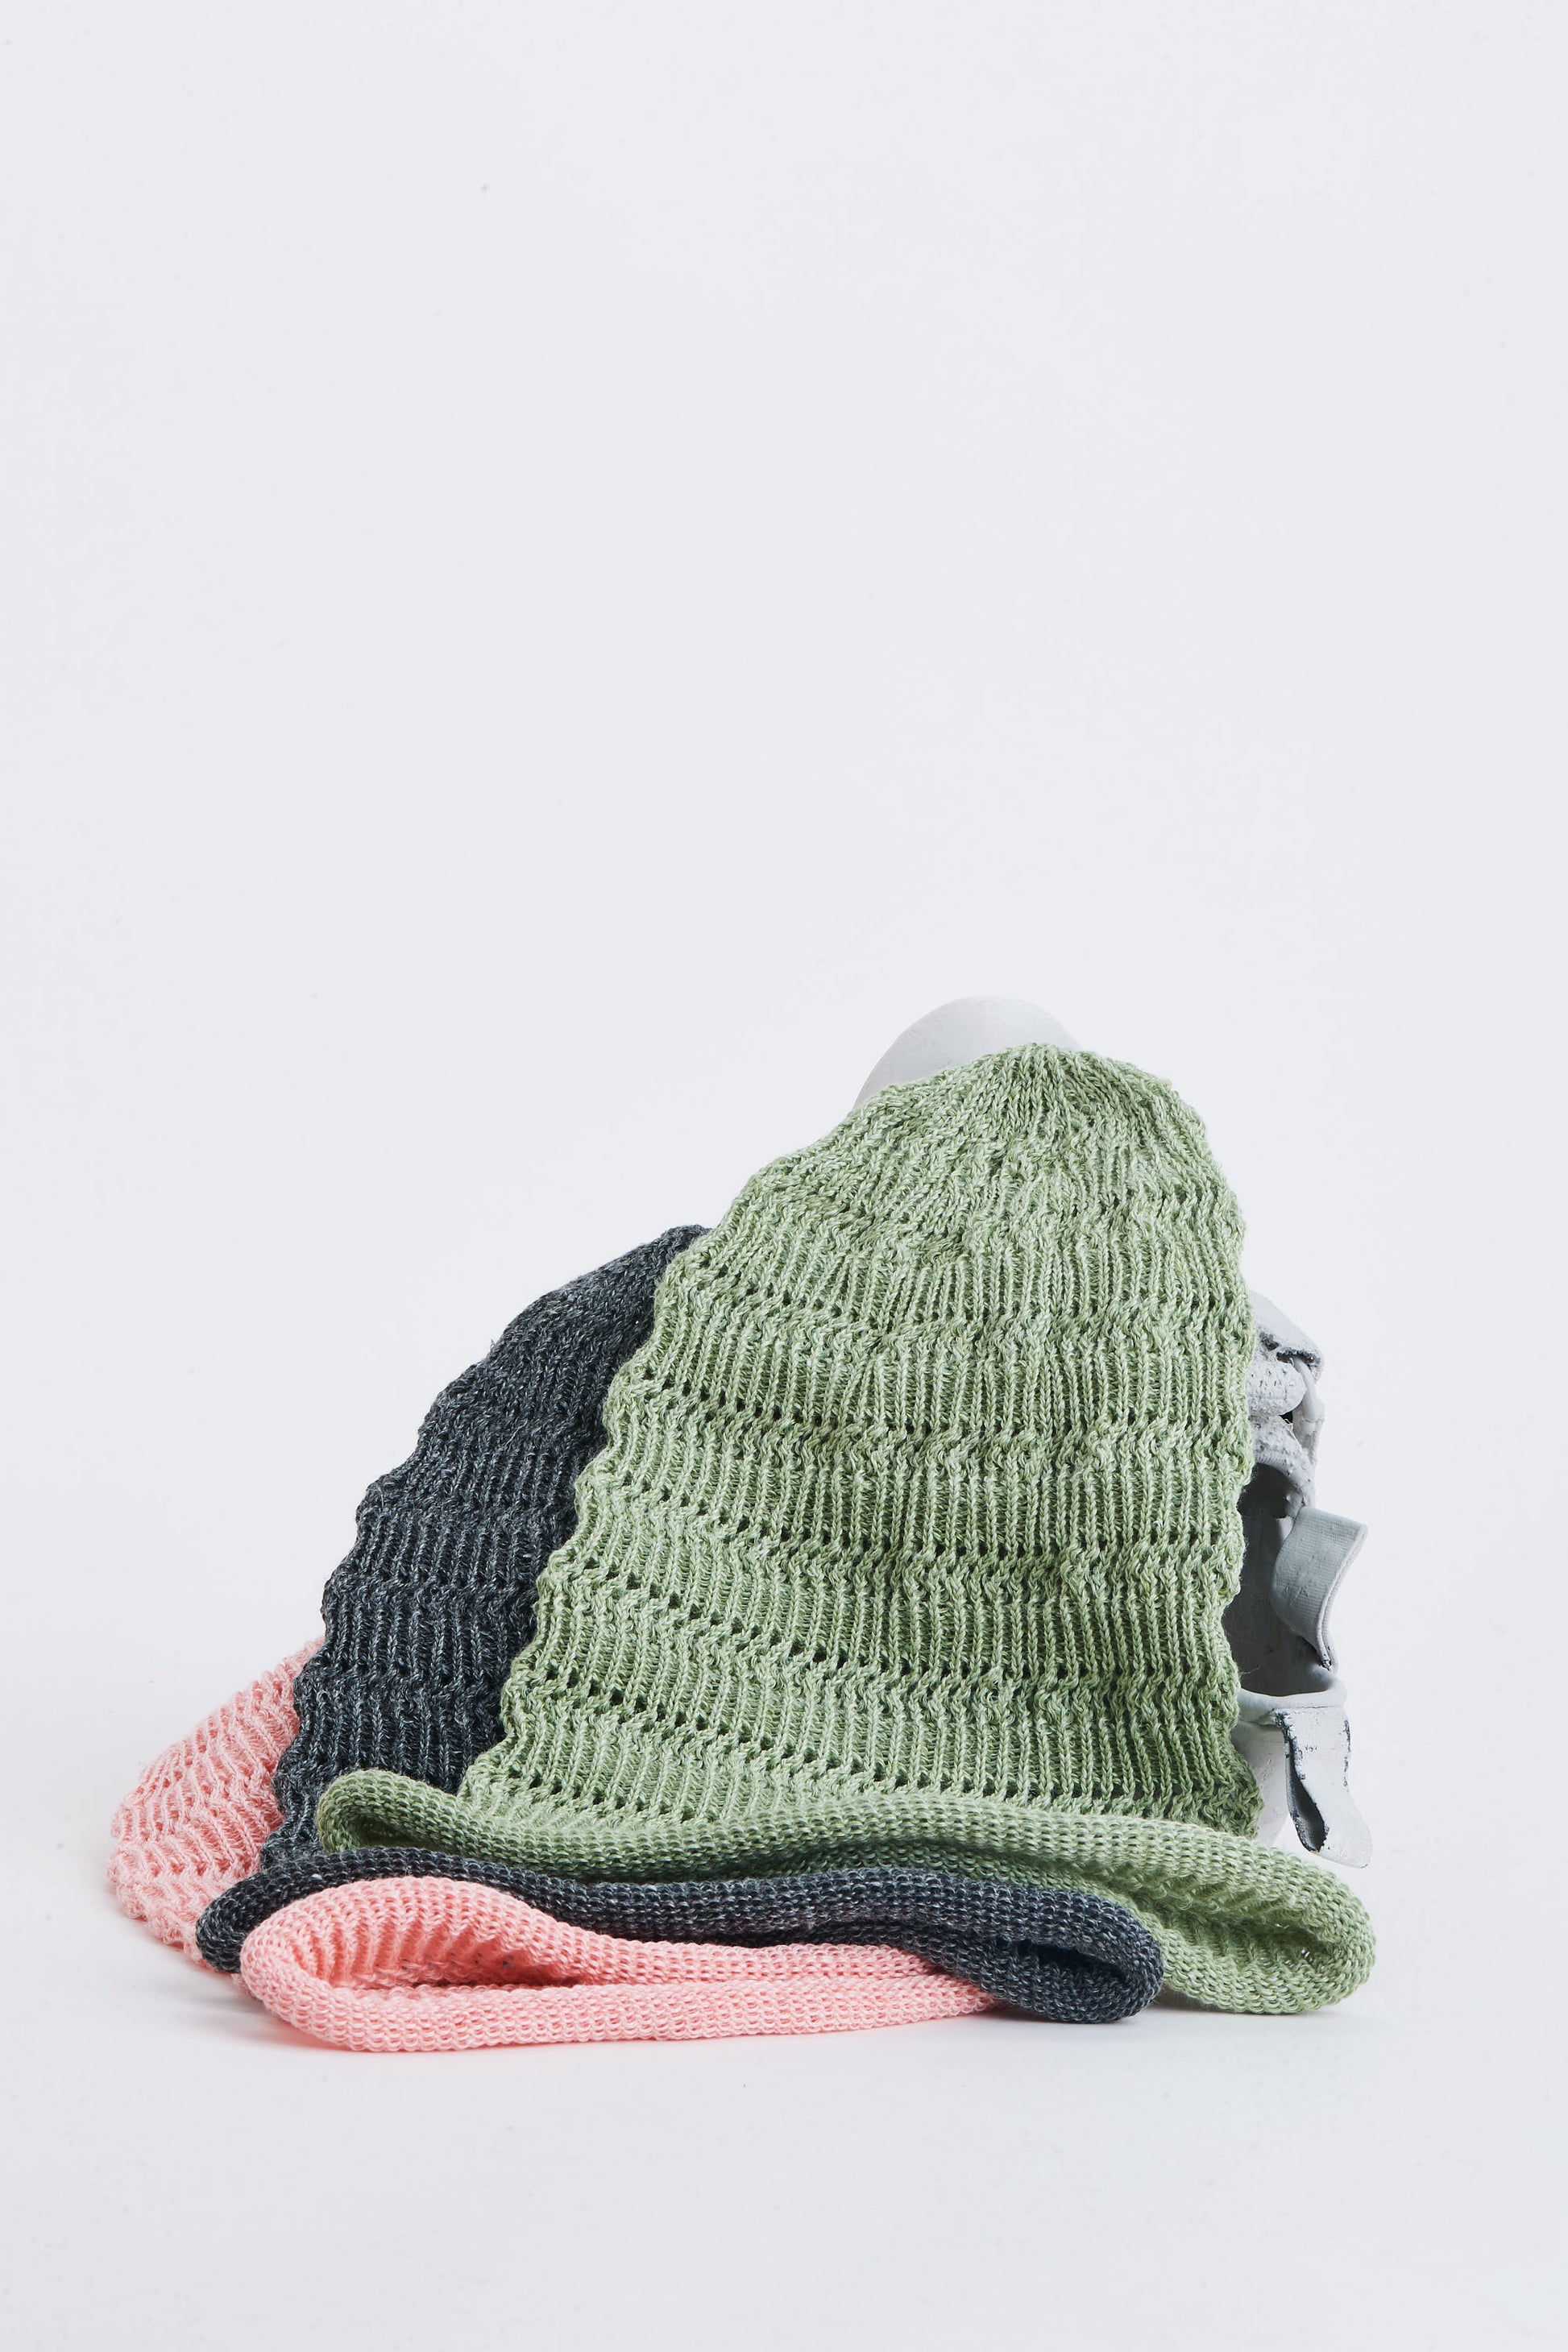 Japanese Hemp Crochet Beanie - color options